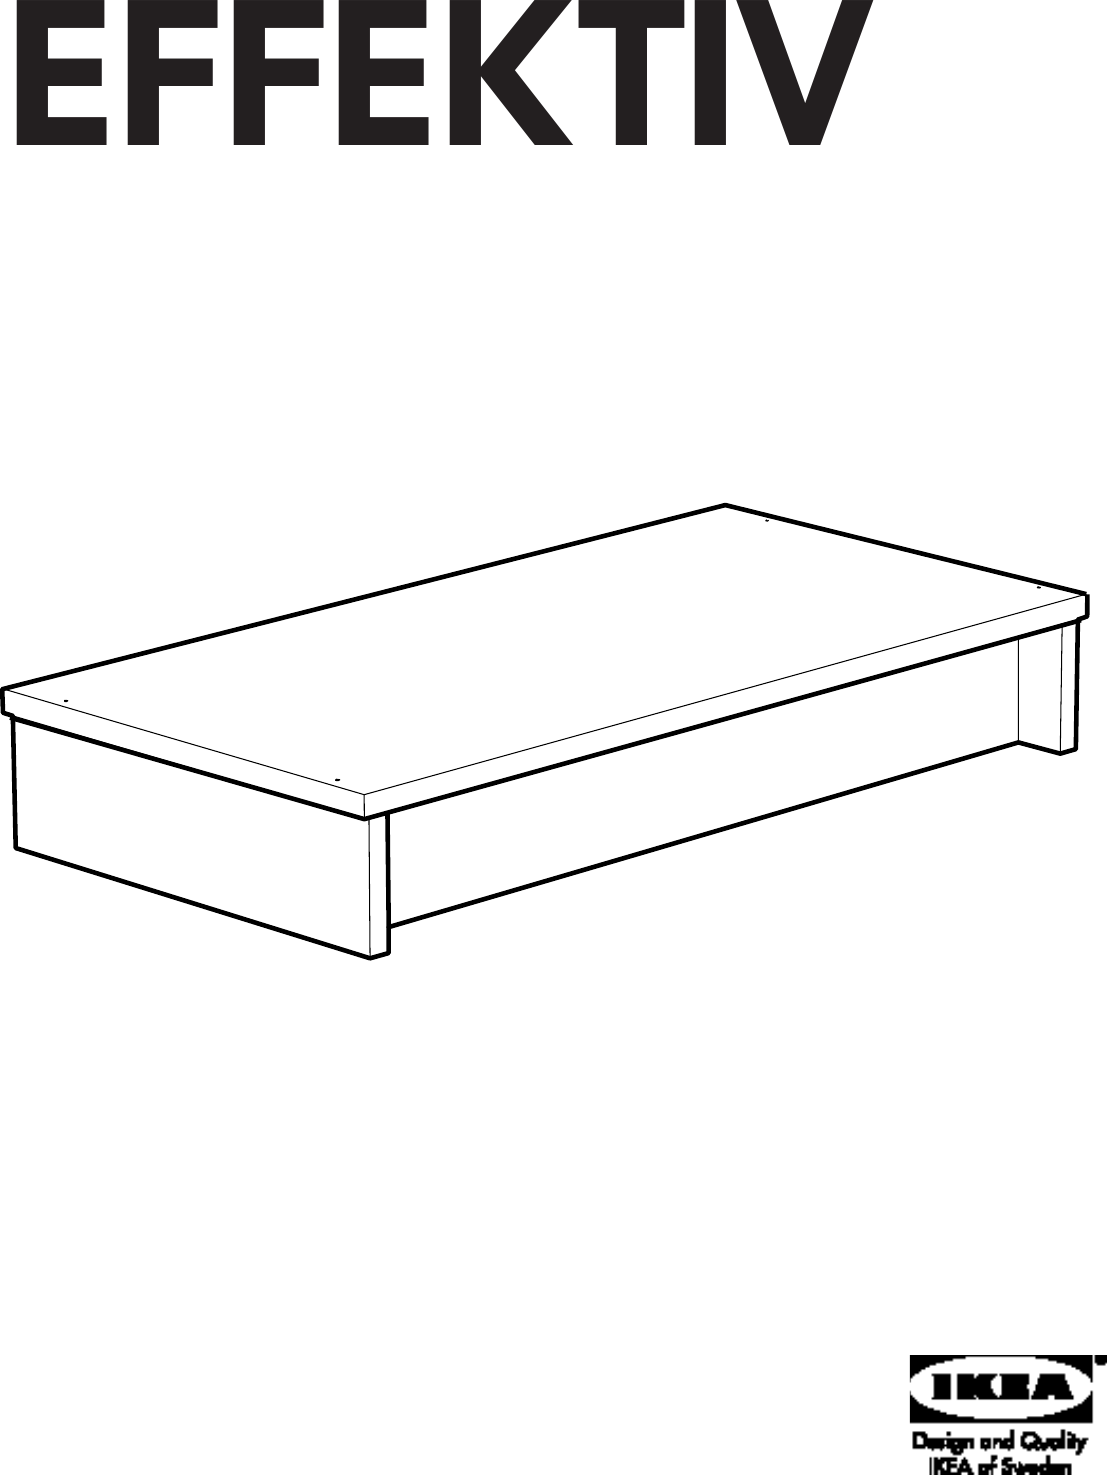 Page 1 of 8 - Ikea Ikea-Effektiv-Plinth-33-1-2-Assembly-Instruction